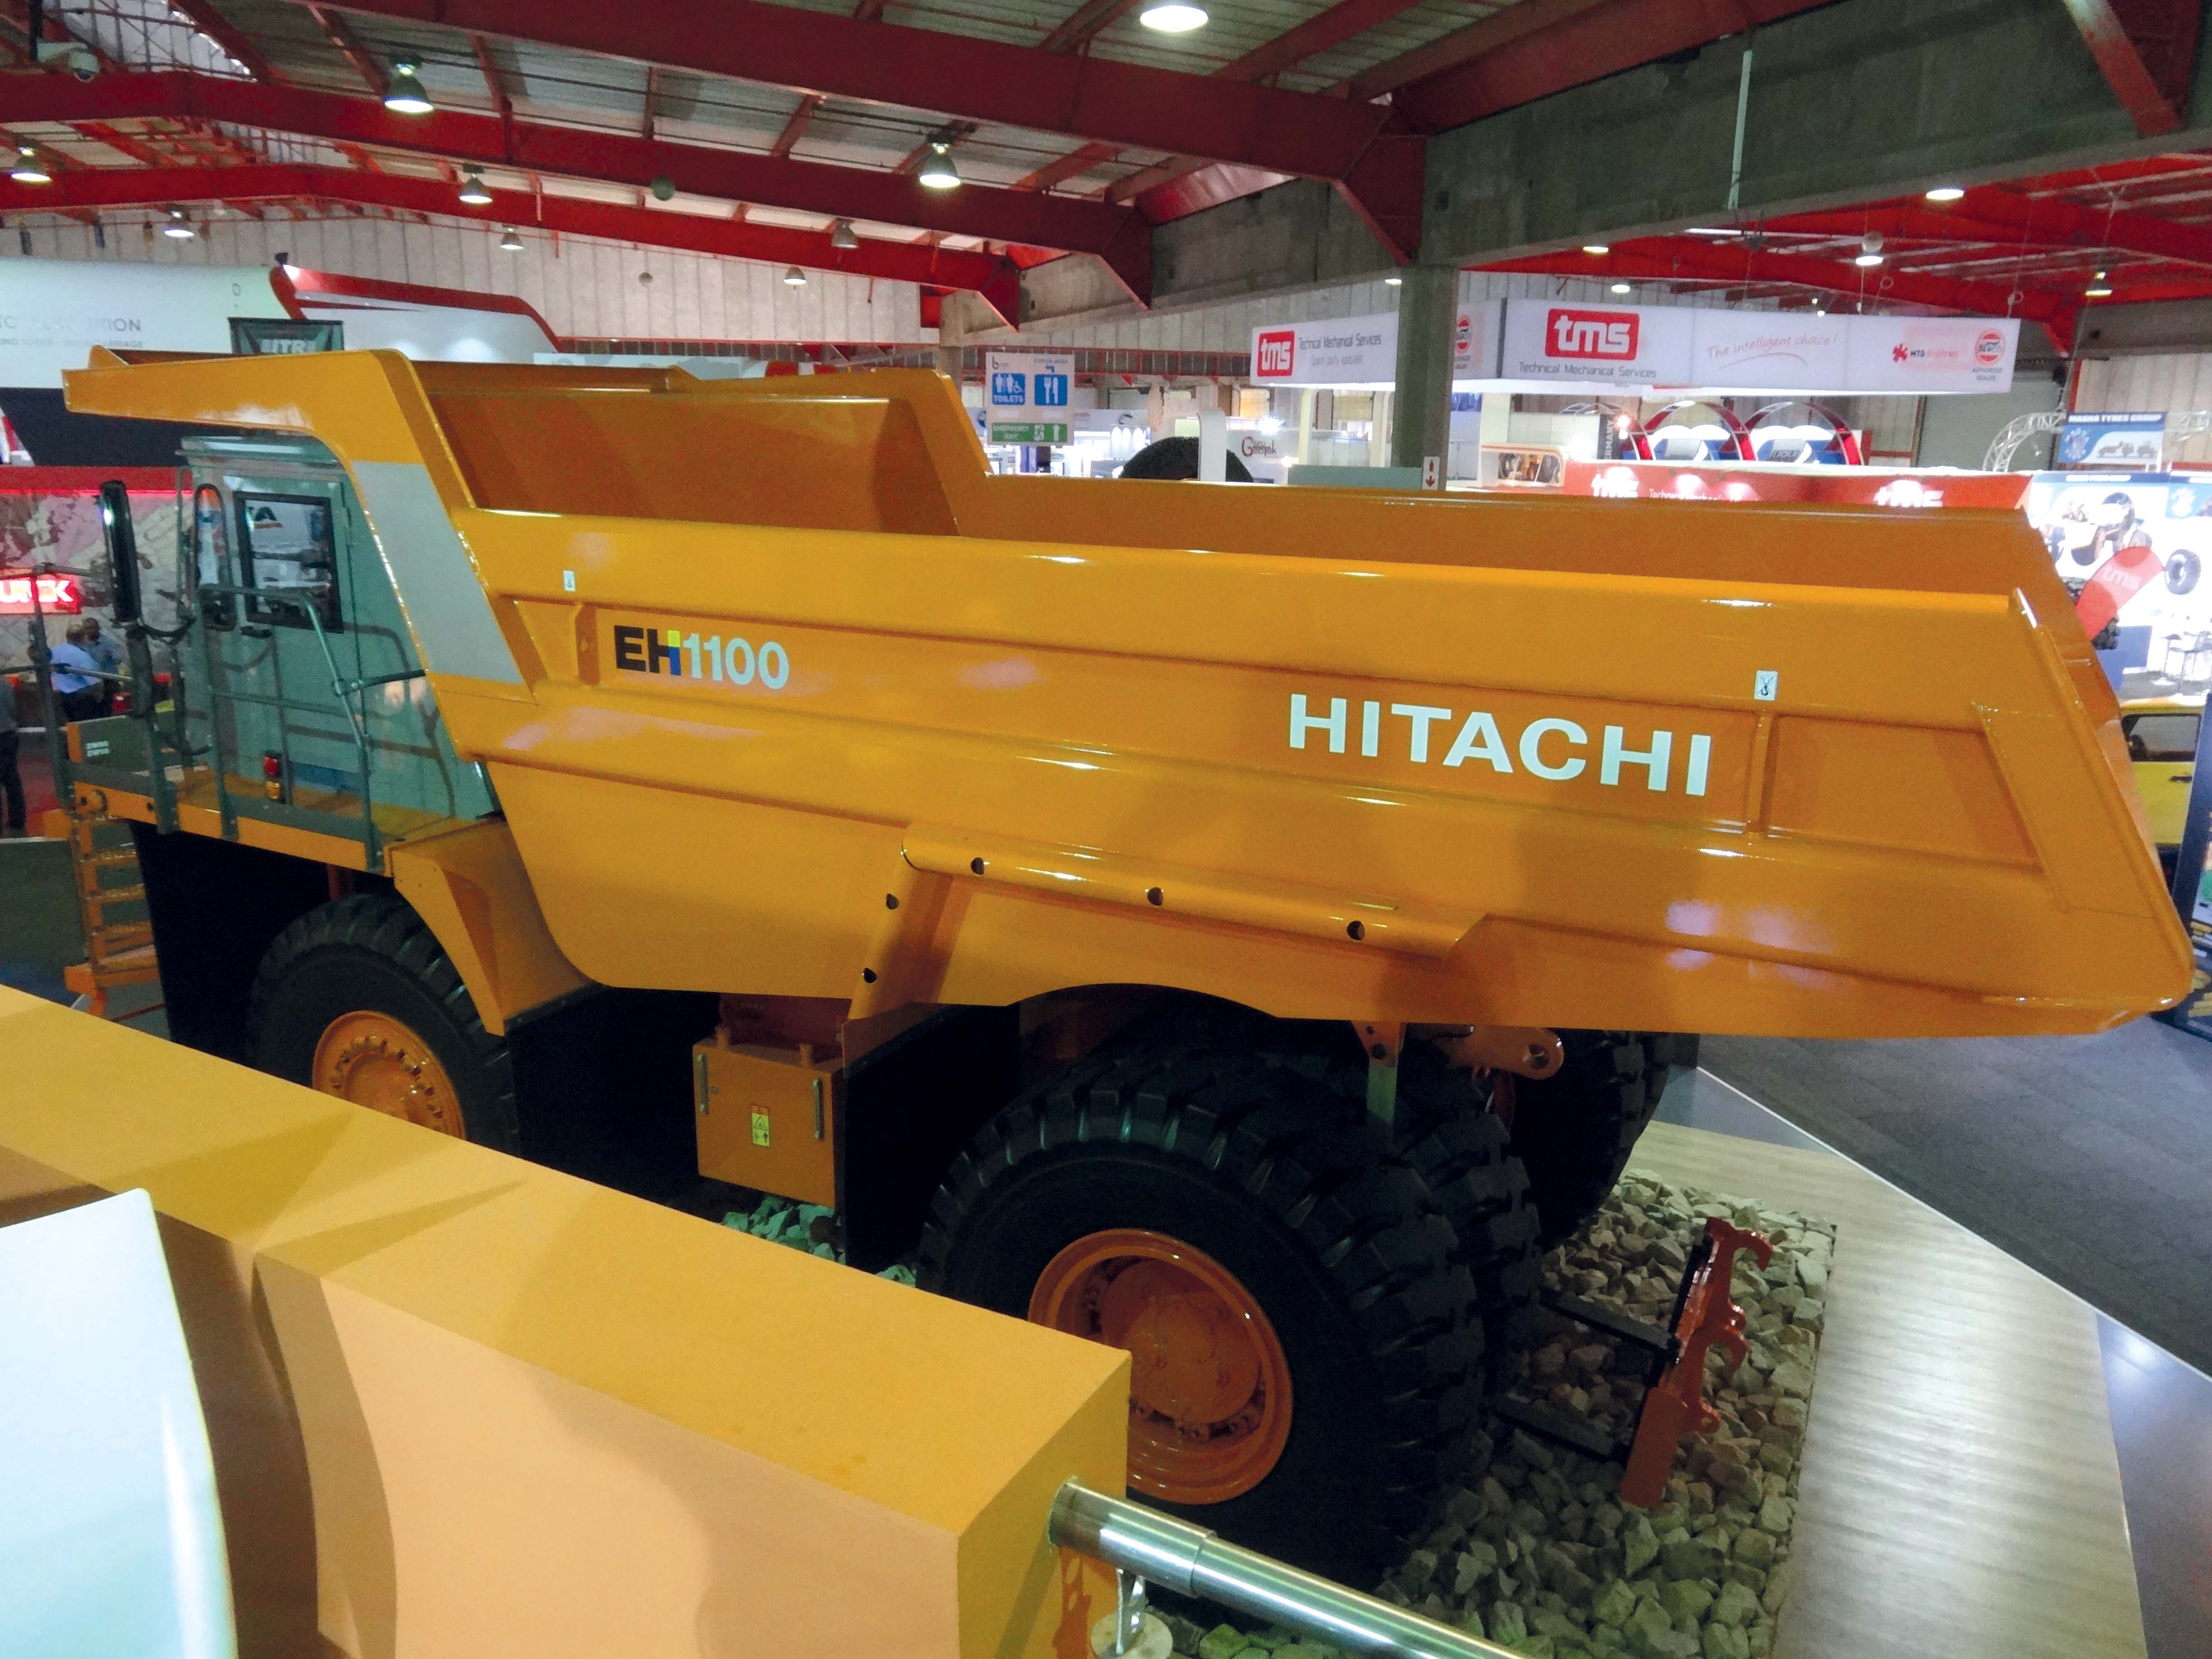 Hitachi EH1100 rigid dump trucks